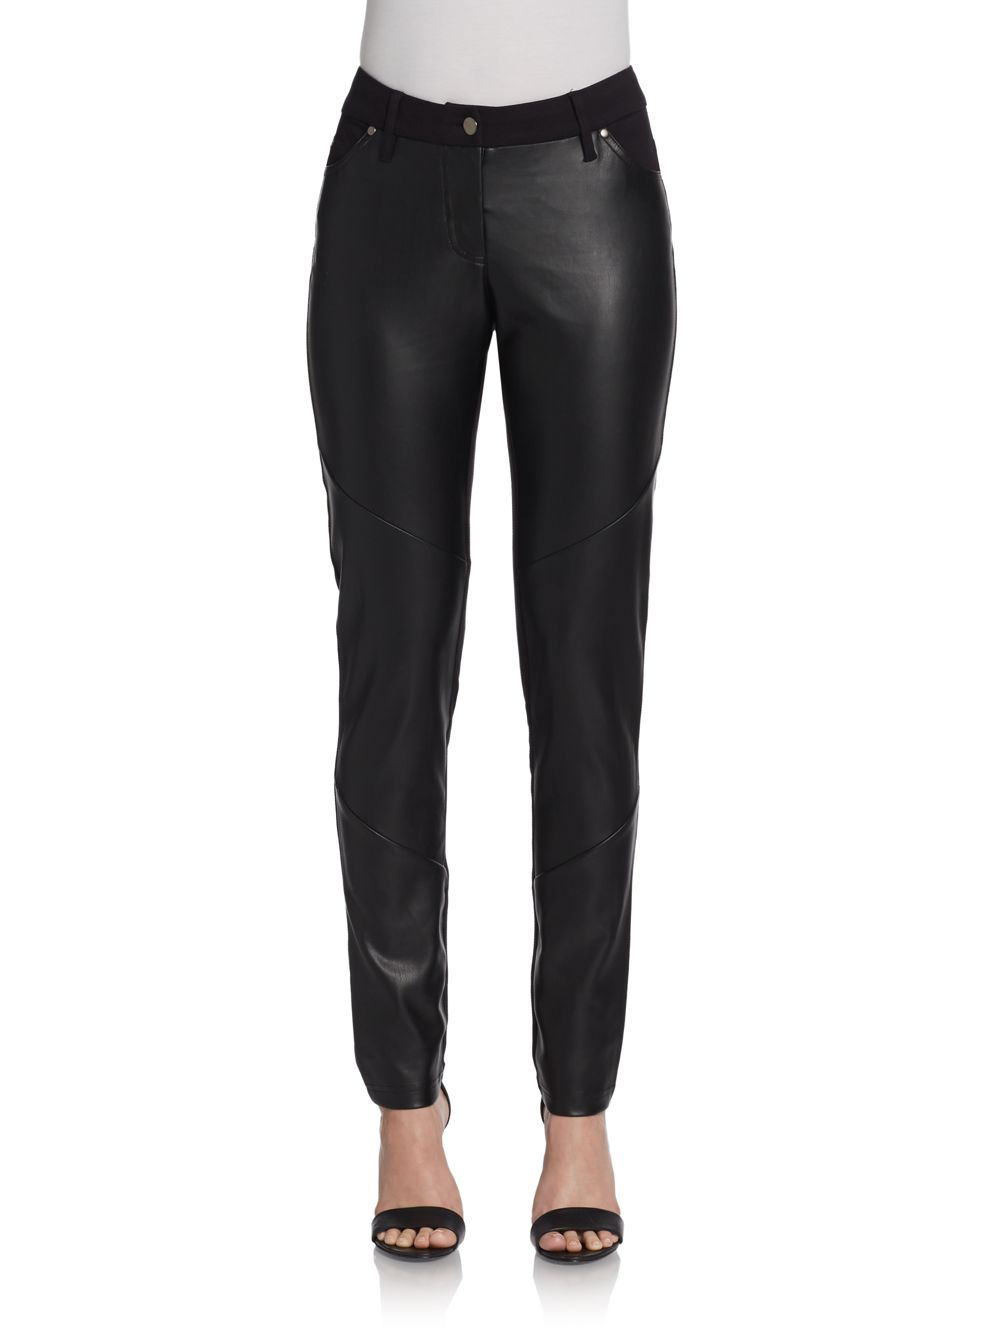 Lyst - Saks Fifth Avenue Black Label Vegan-leather Paneled Pants in Black